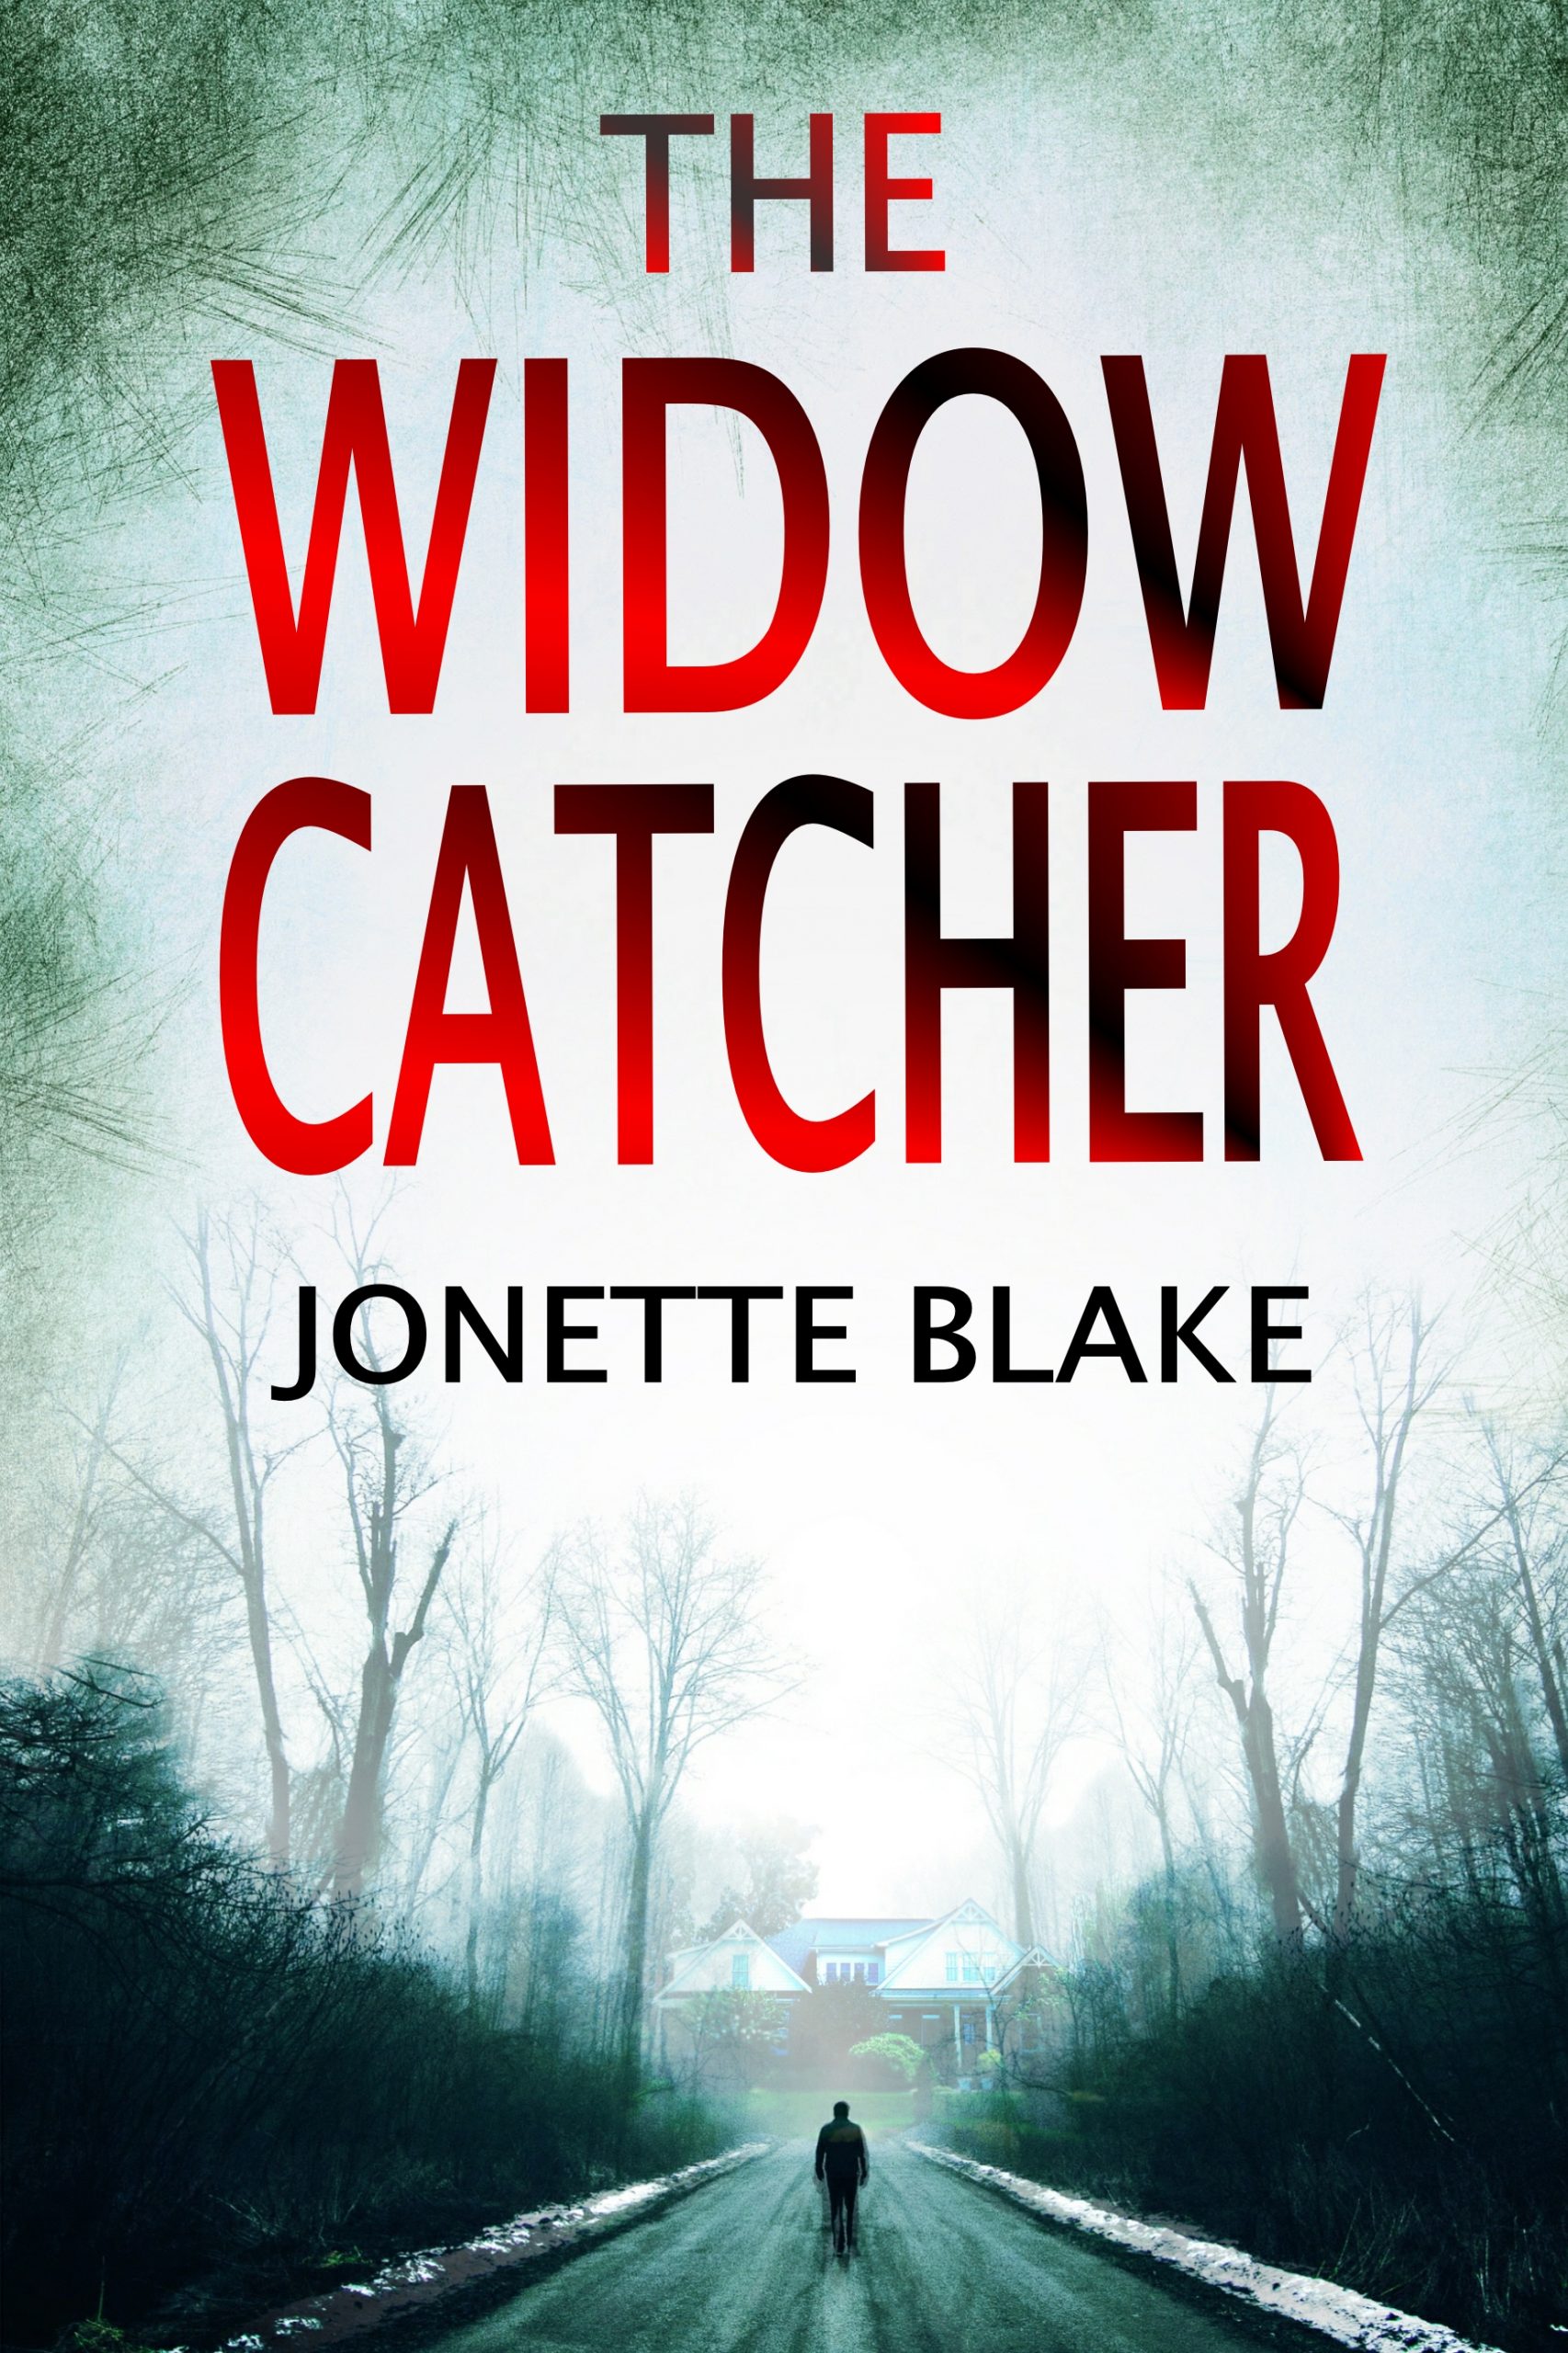 The Widow Catcher by Jonette Blake